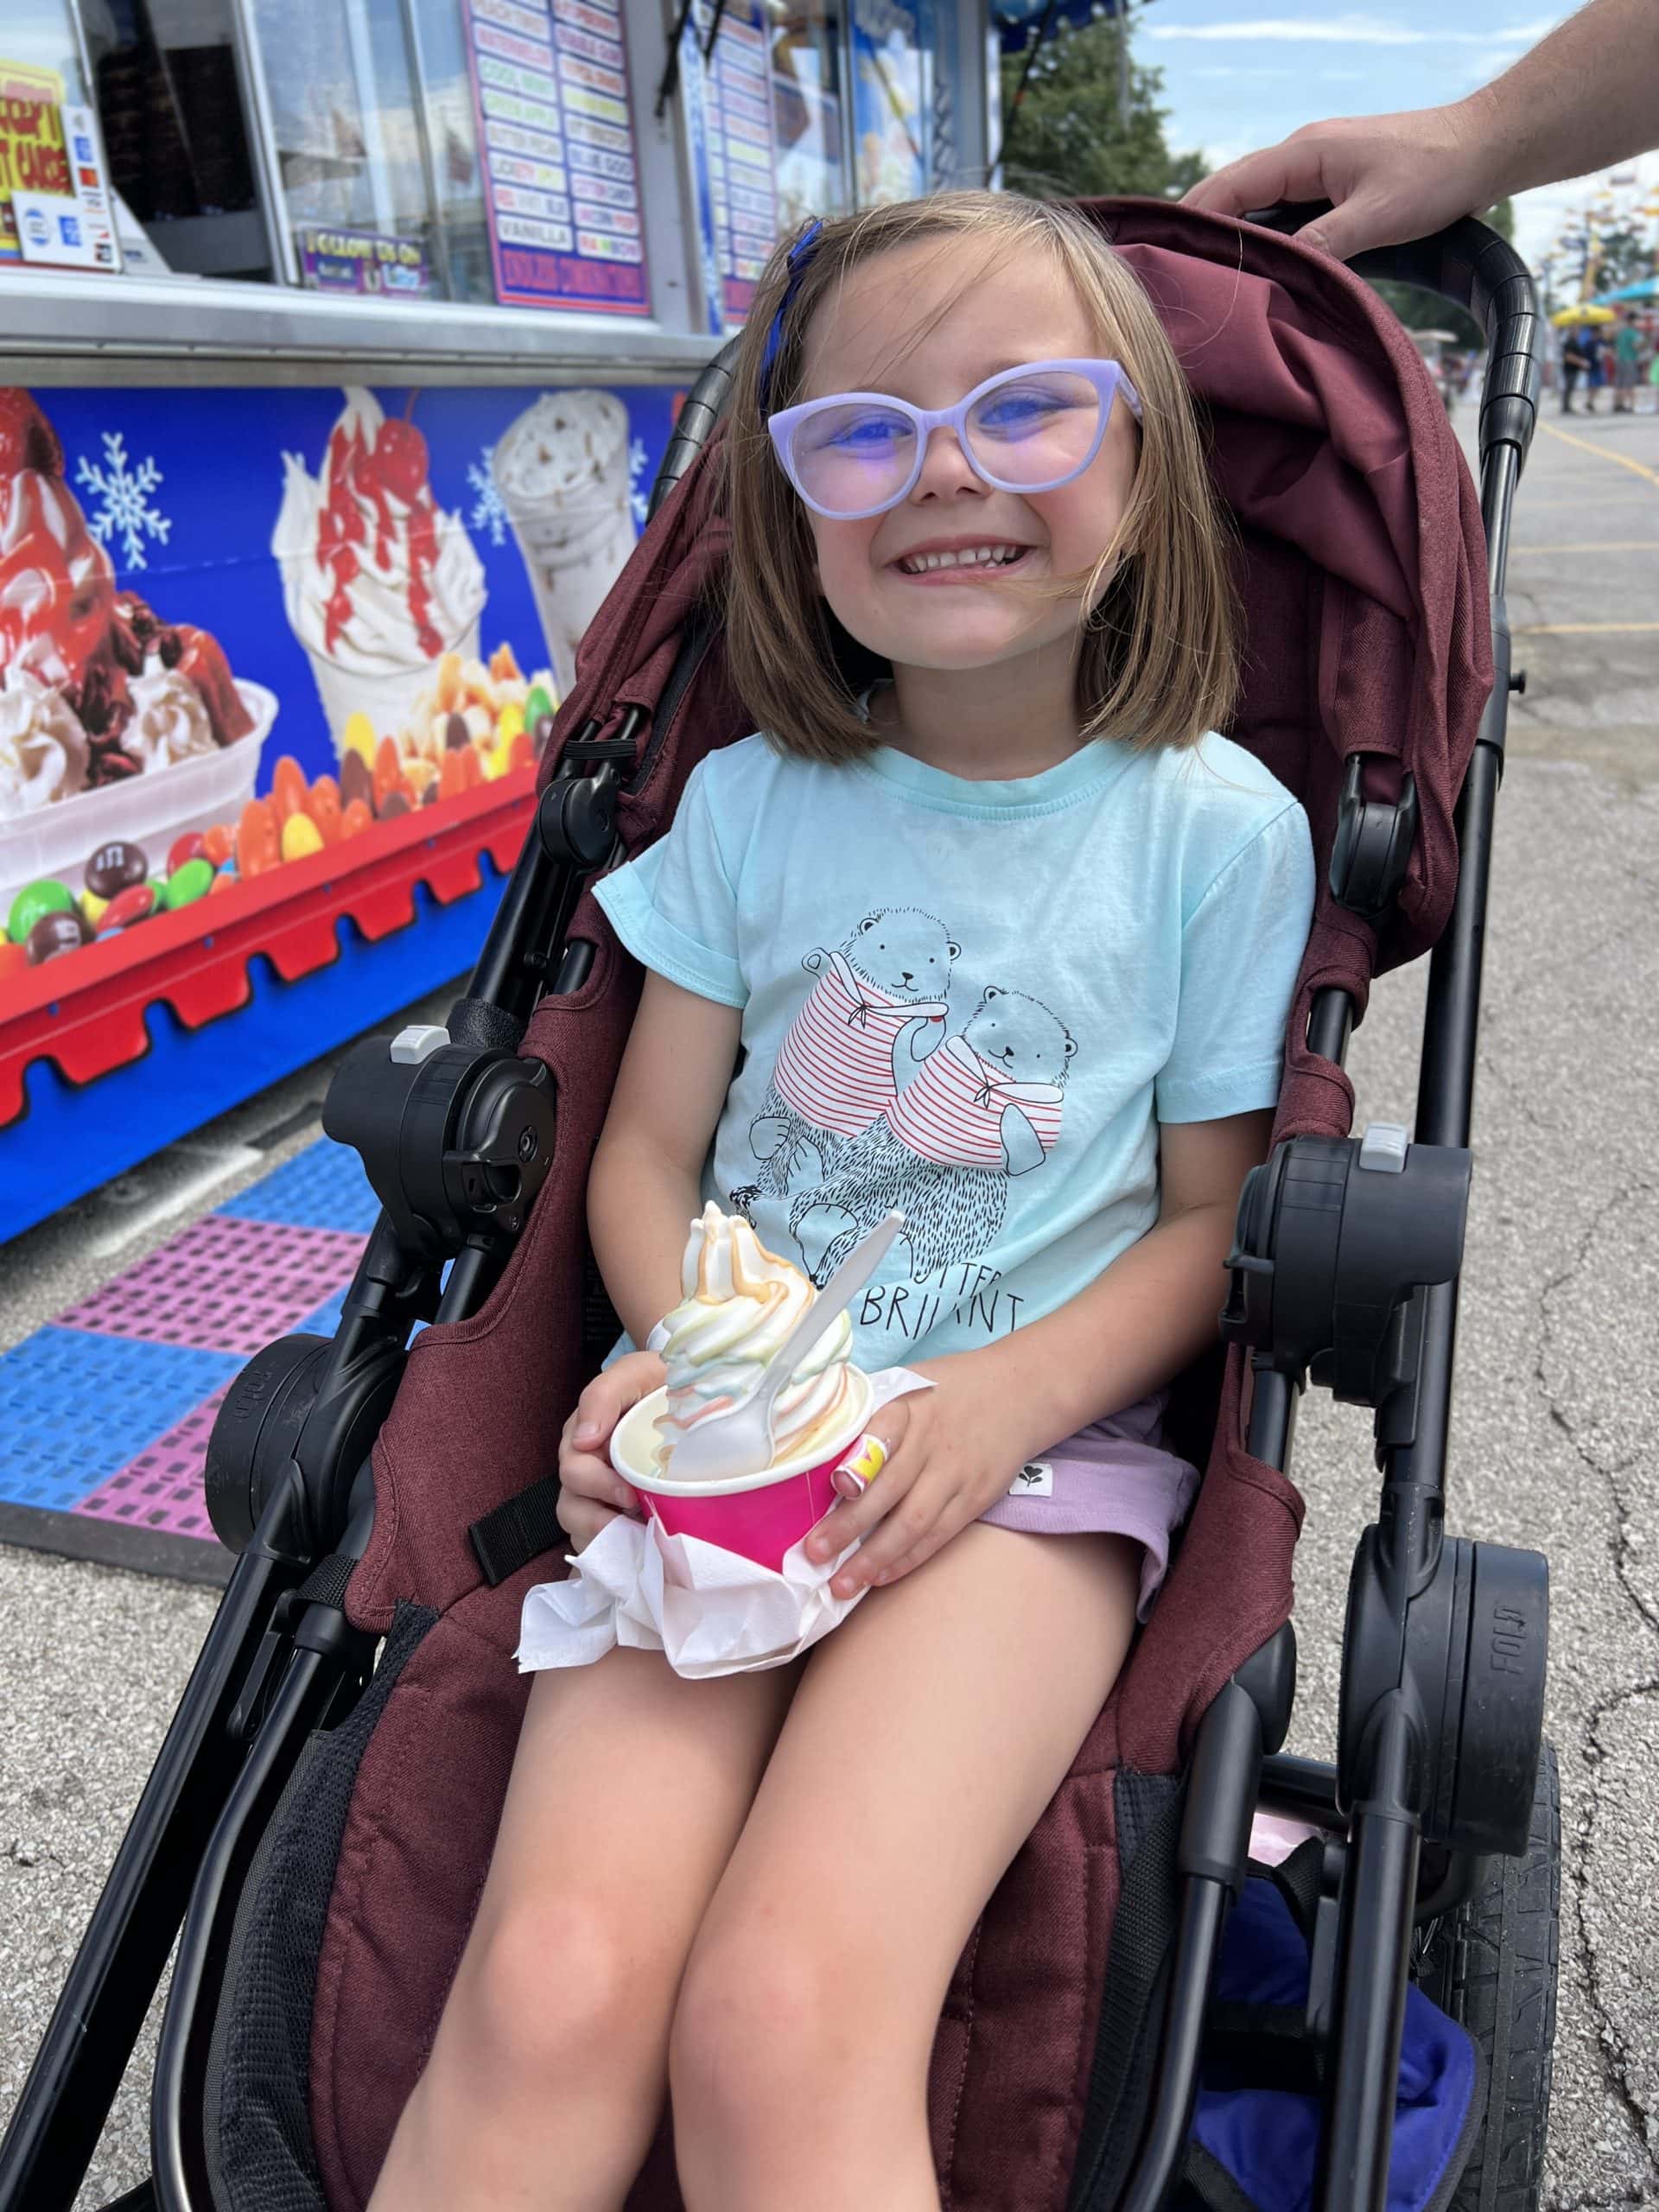 girl enjoying flavor burst ice cream at the Ohio State Fair.